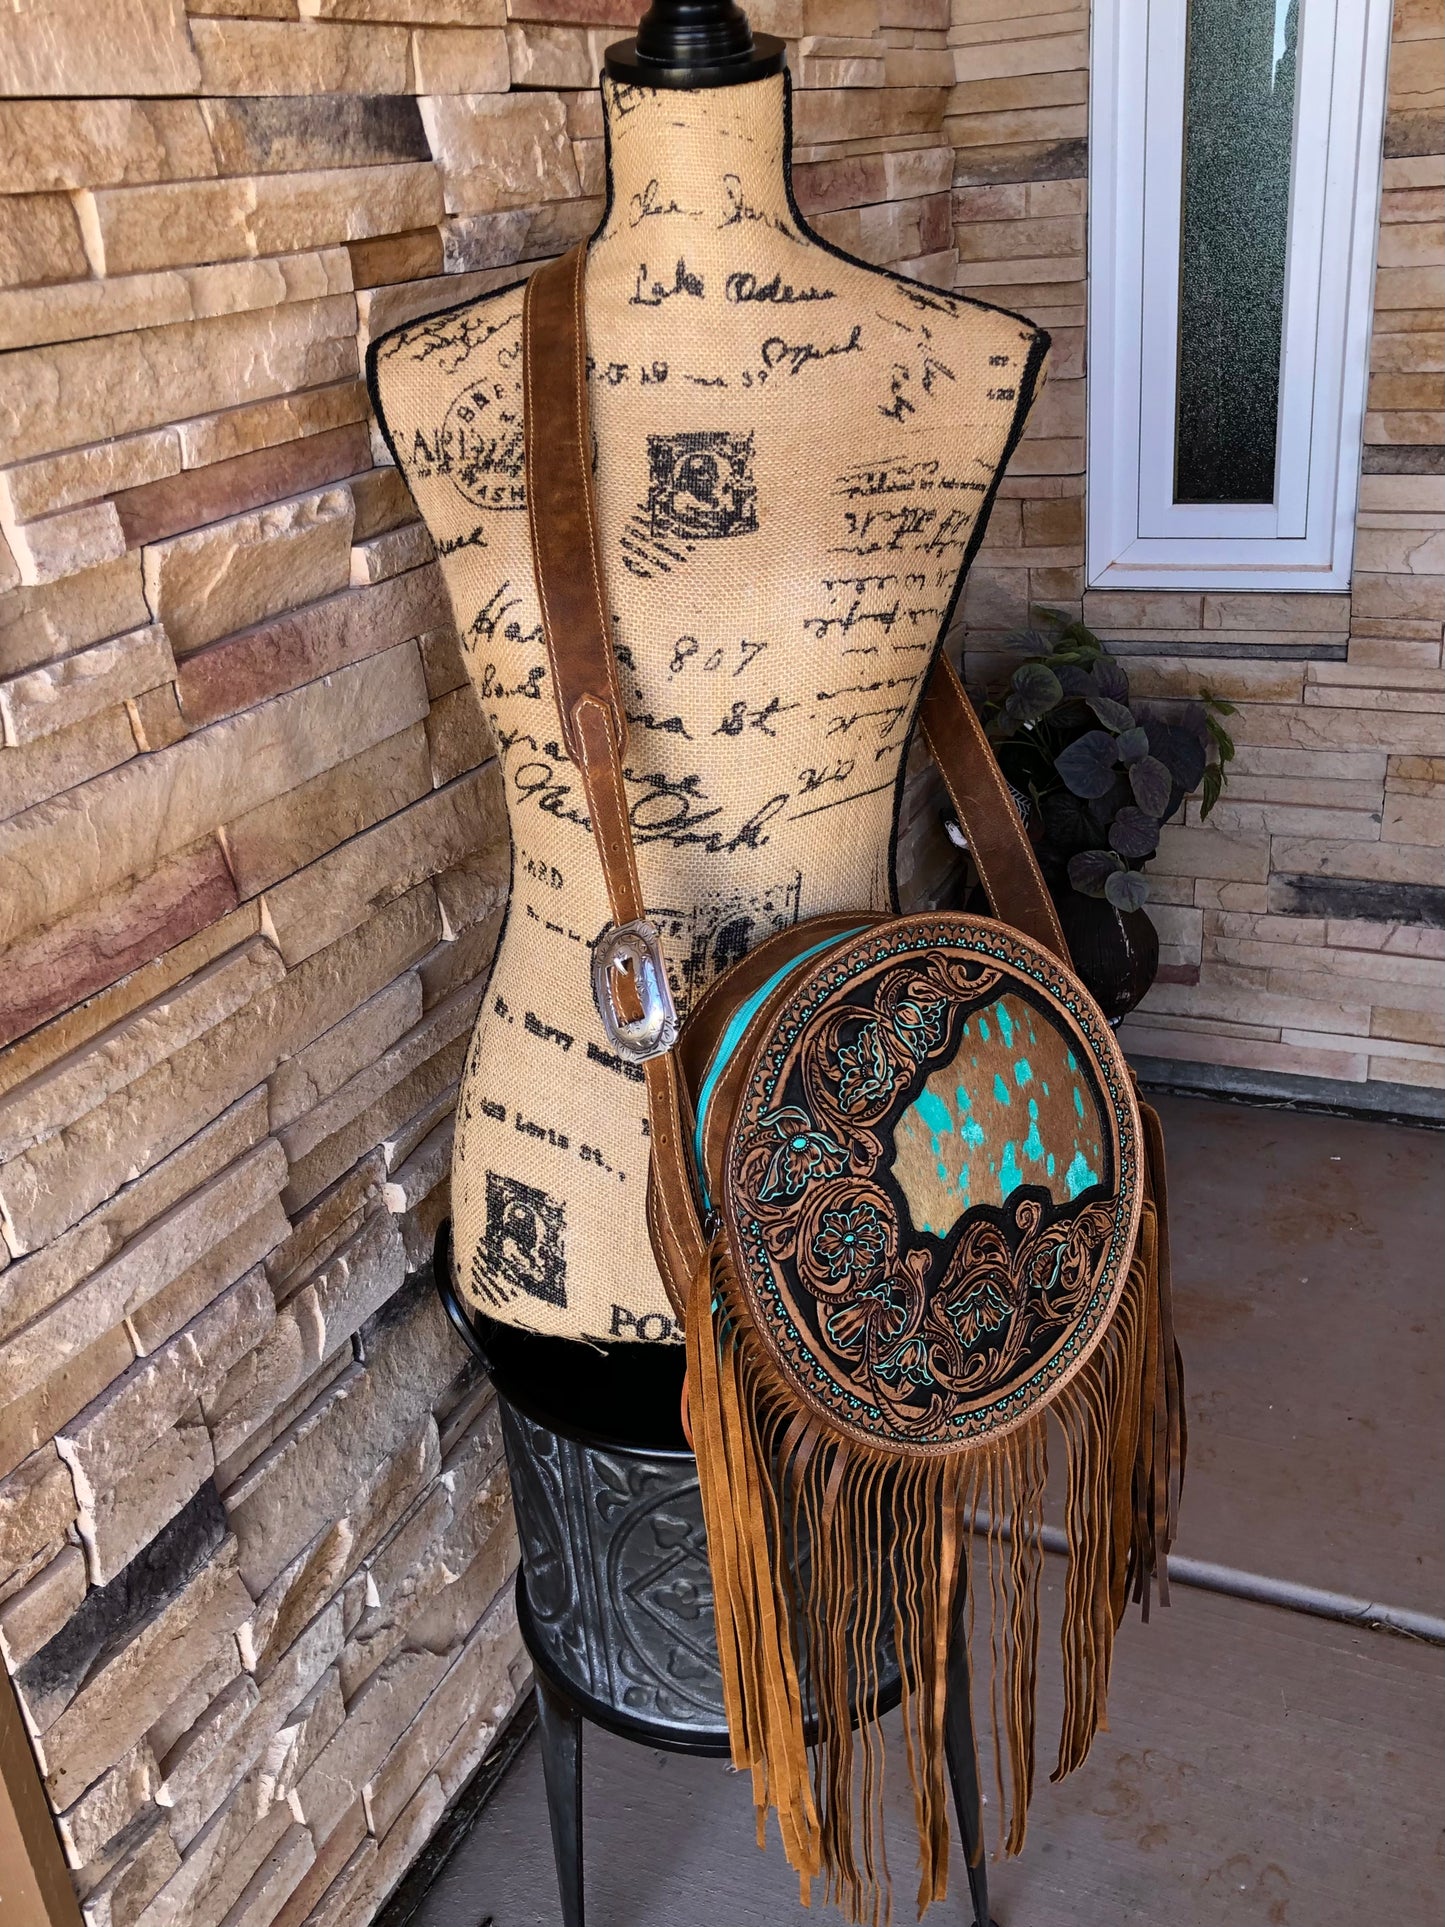 Brown Pattern Cowhide Leather Fringe Handbag – Cowgirl Barn & Tack